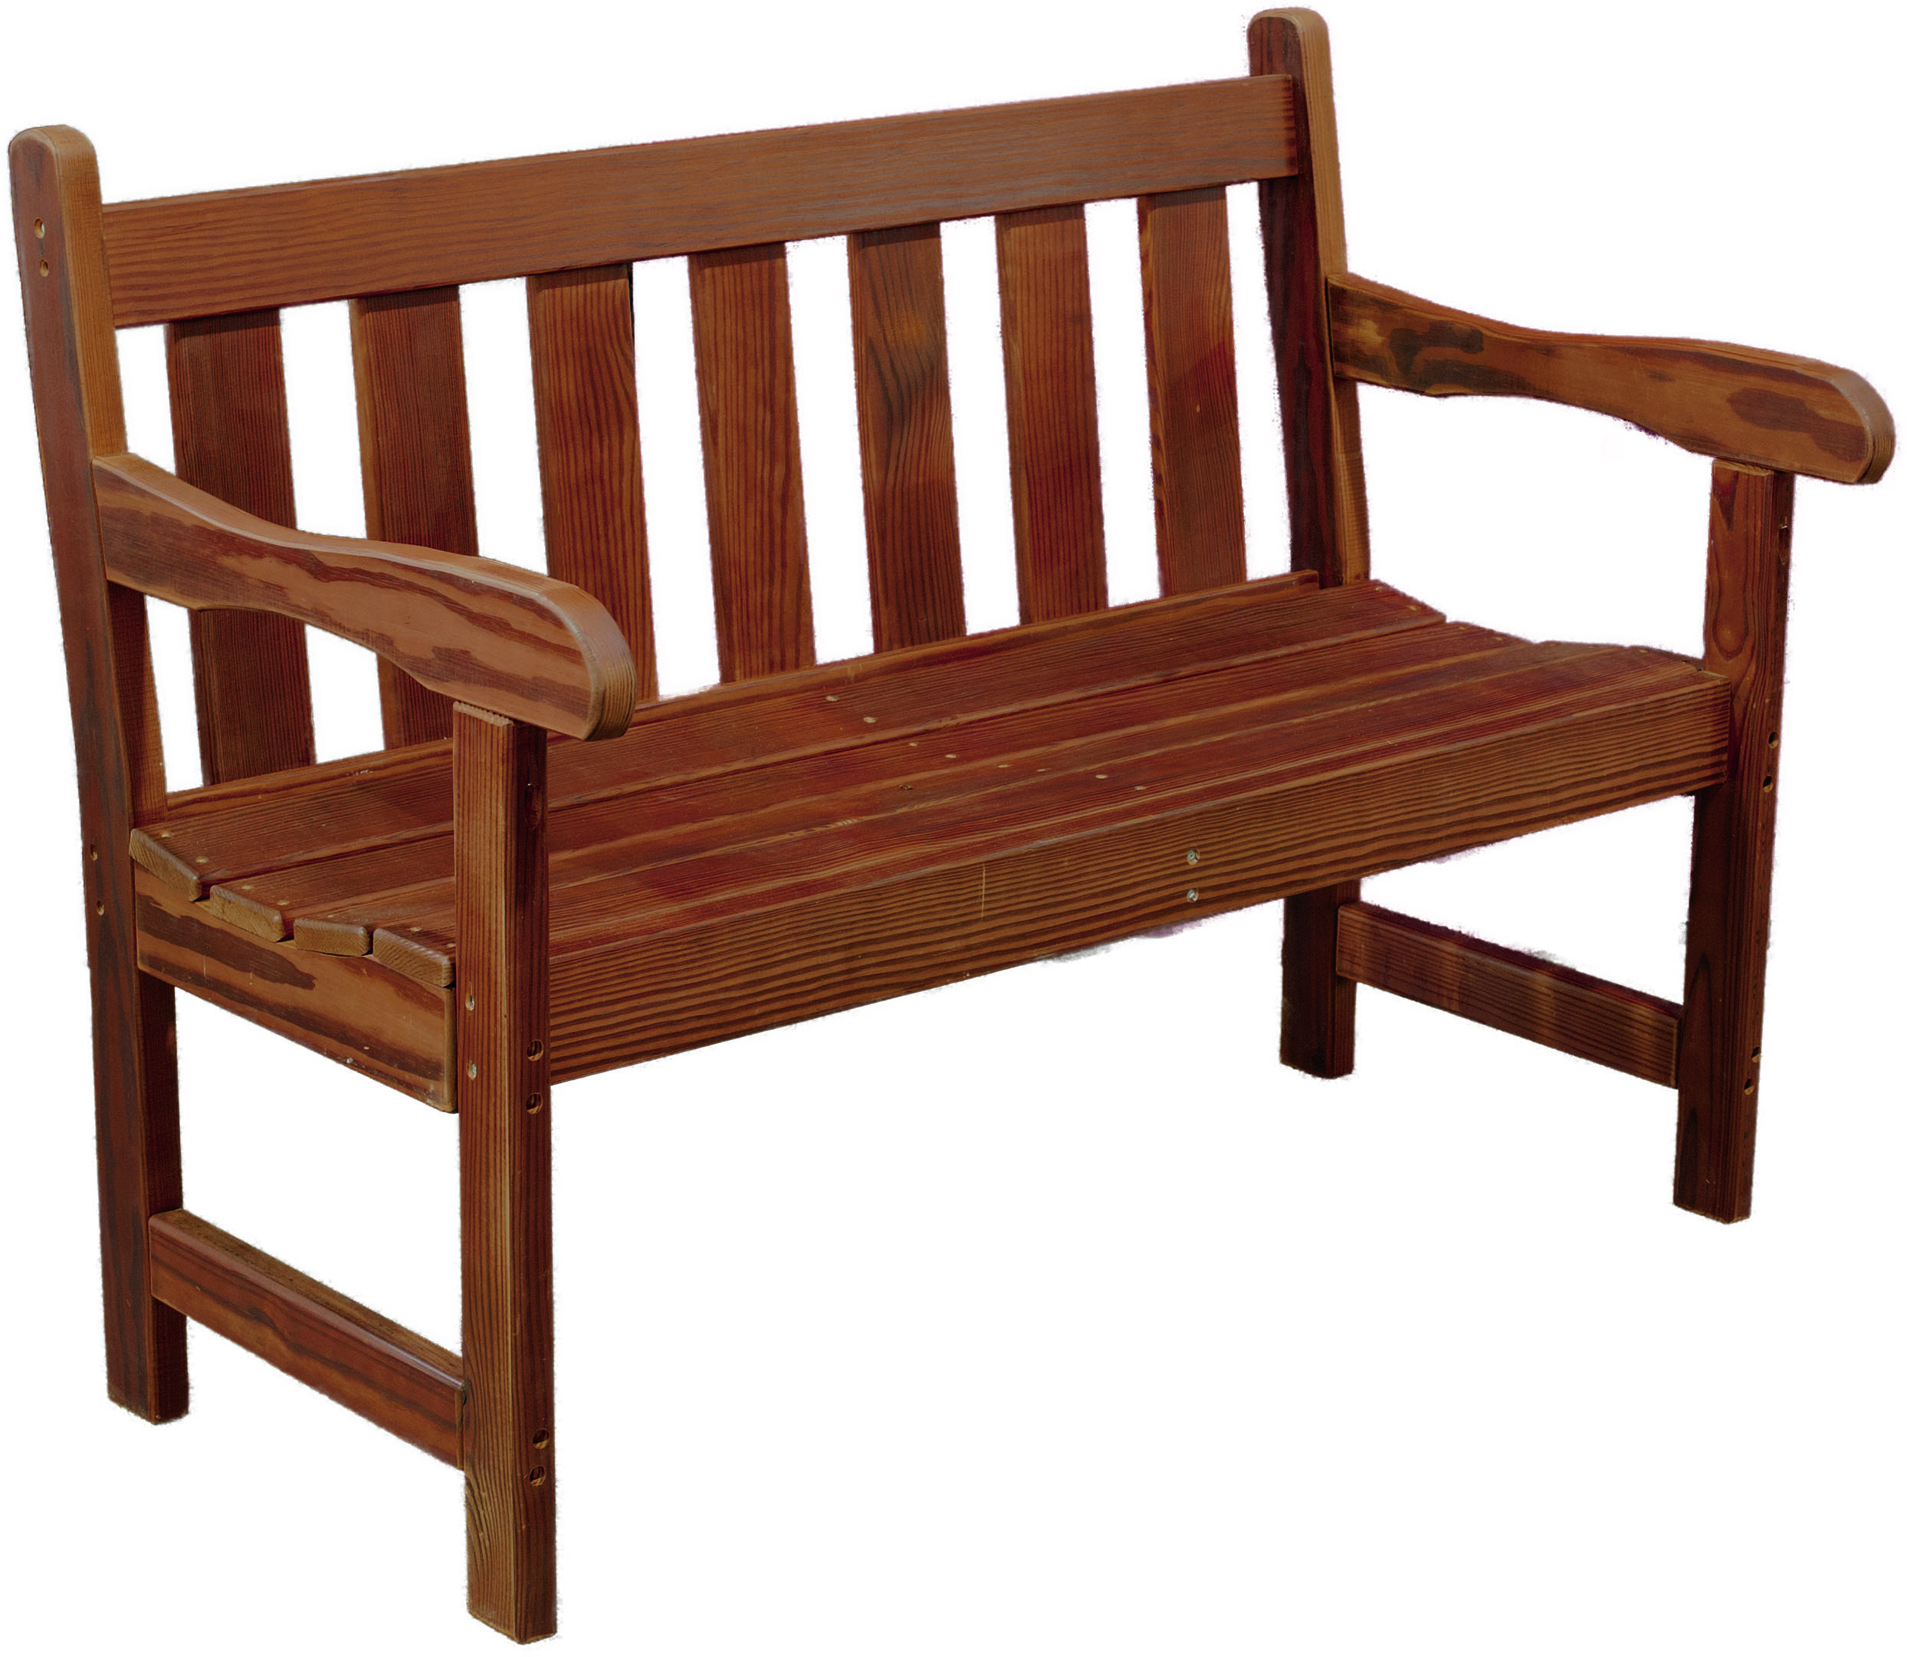 4 ft. garden bench | 4 ft. garden bench by weaver furniture sales